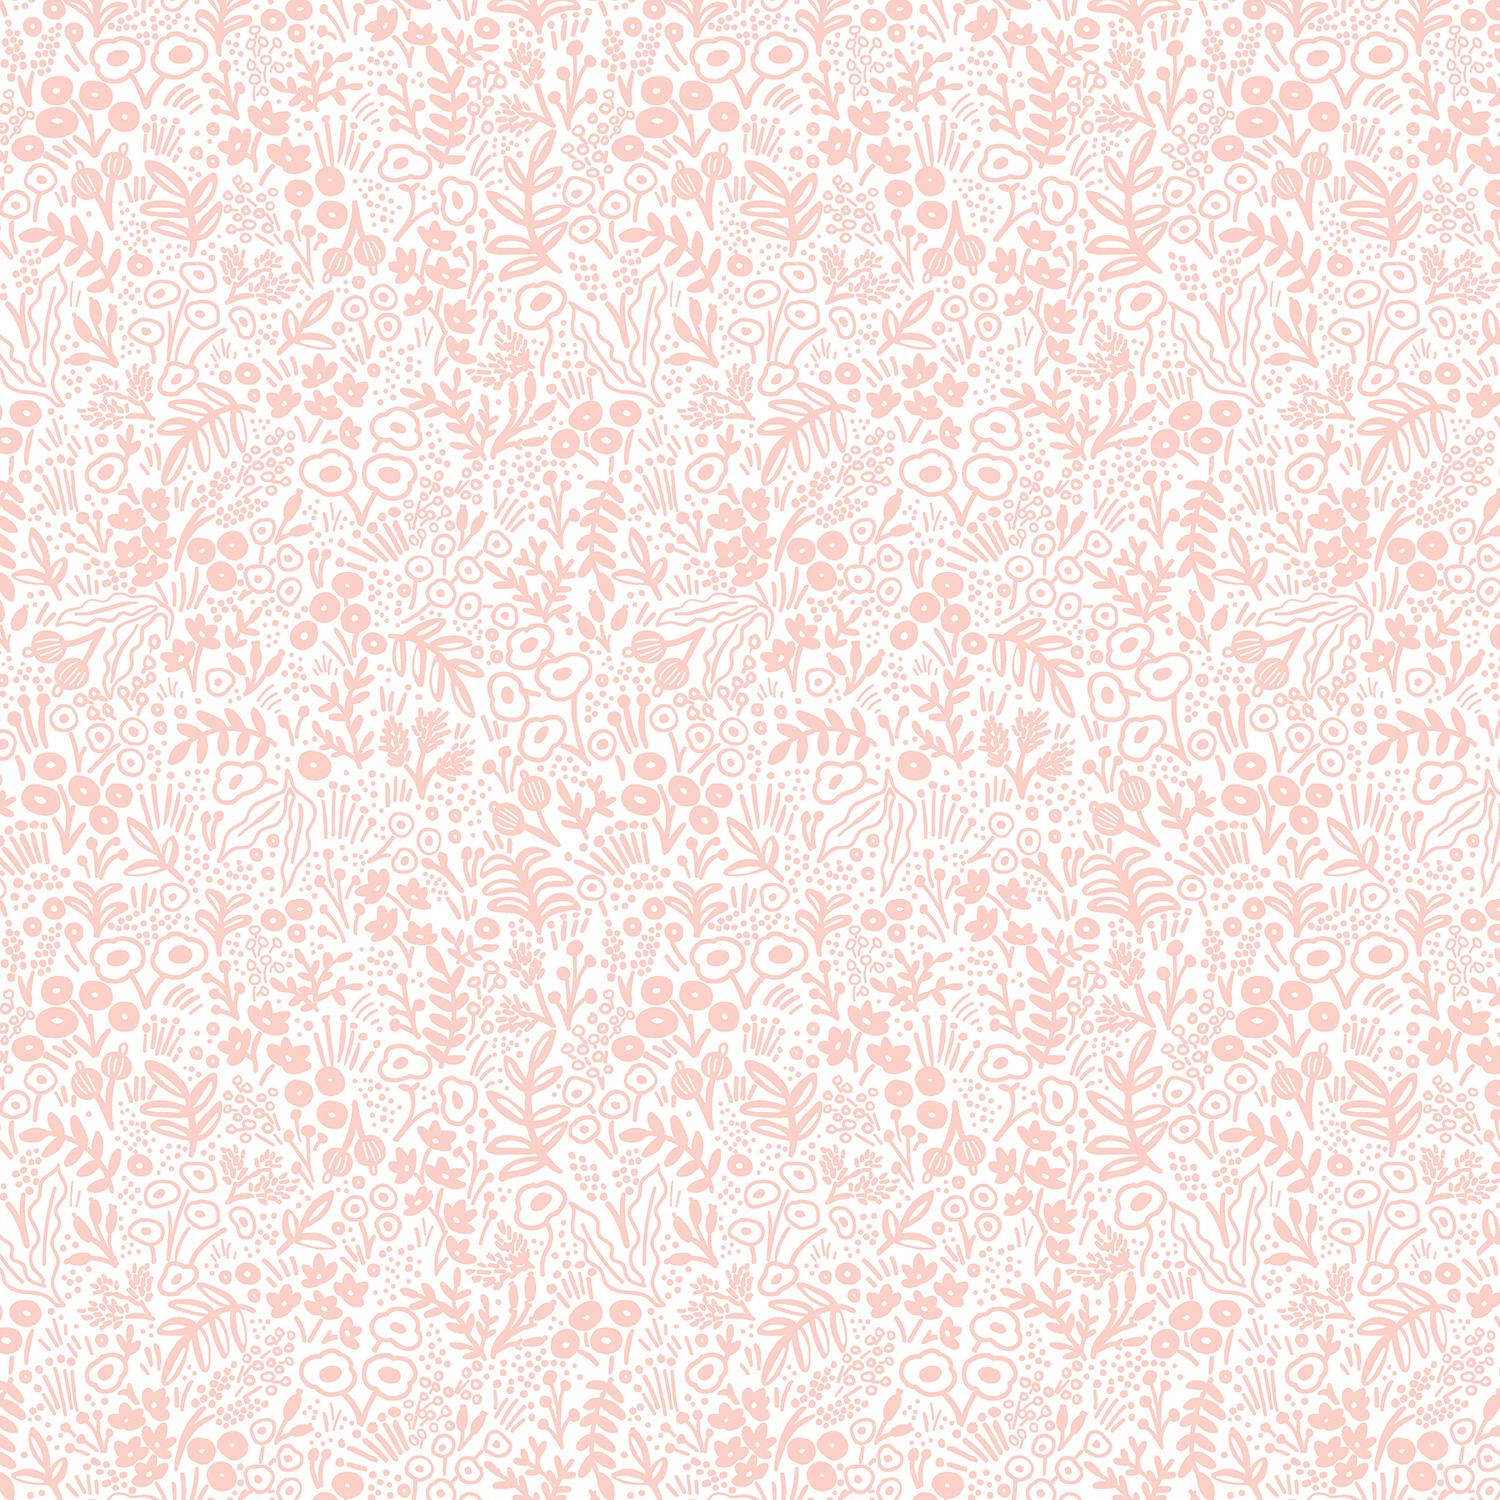 Tapestry Lace- Blush - RP500-BL2 - RJR